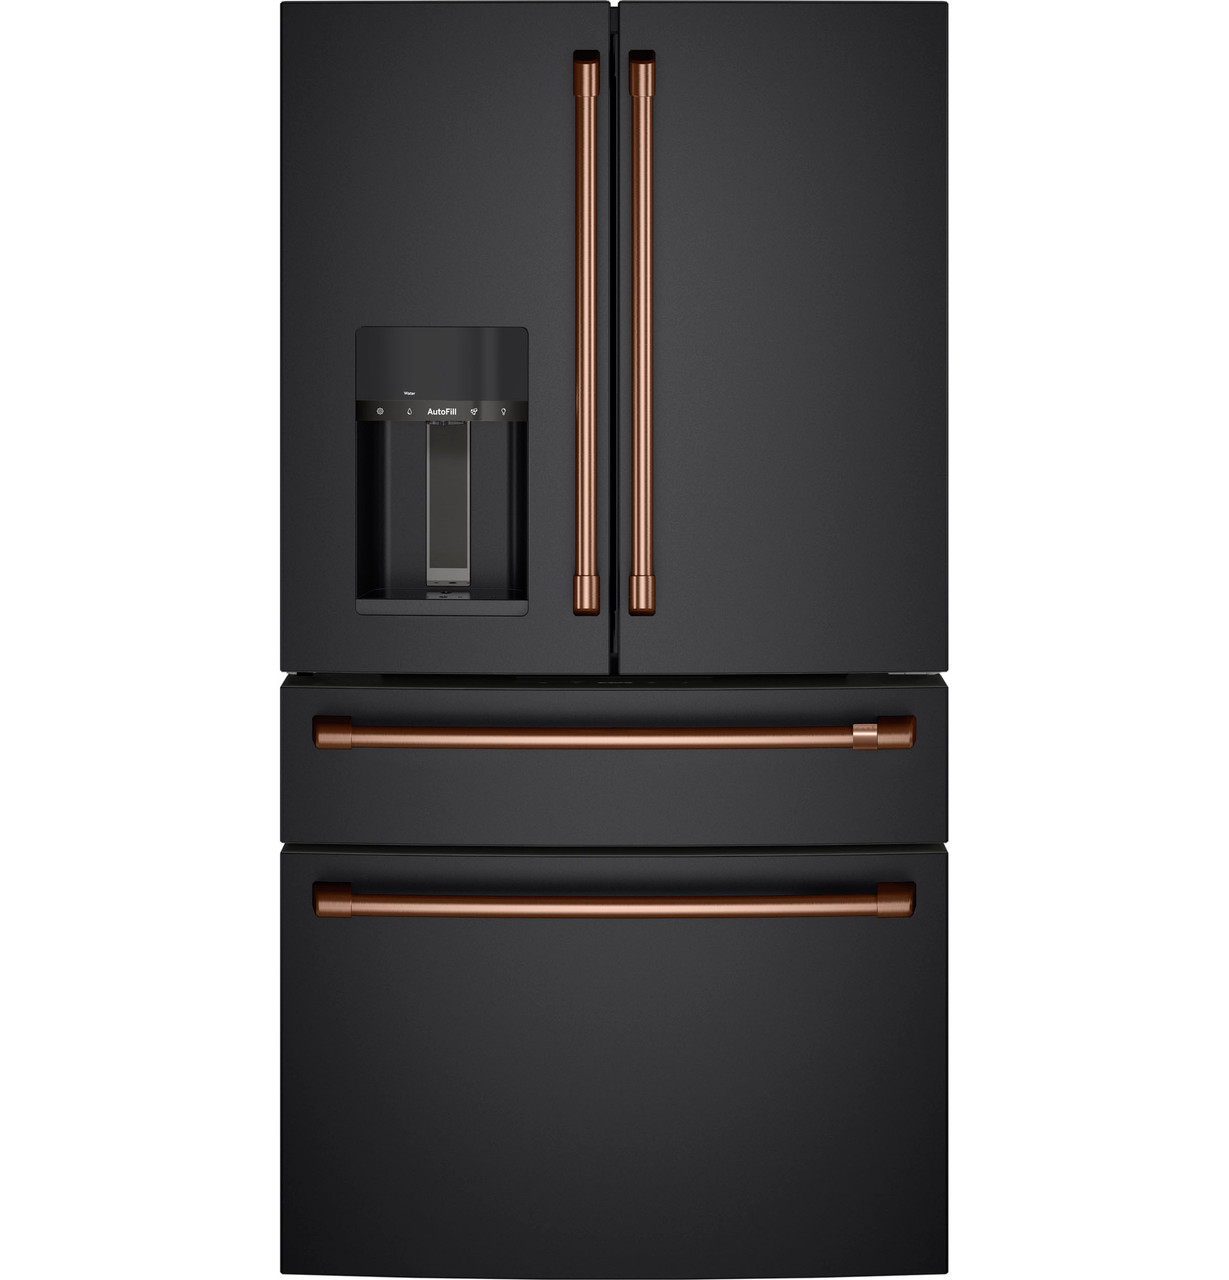 Luxury Look Fridges: Cafe Refrigerators, Don's Appliances